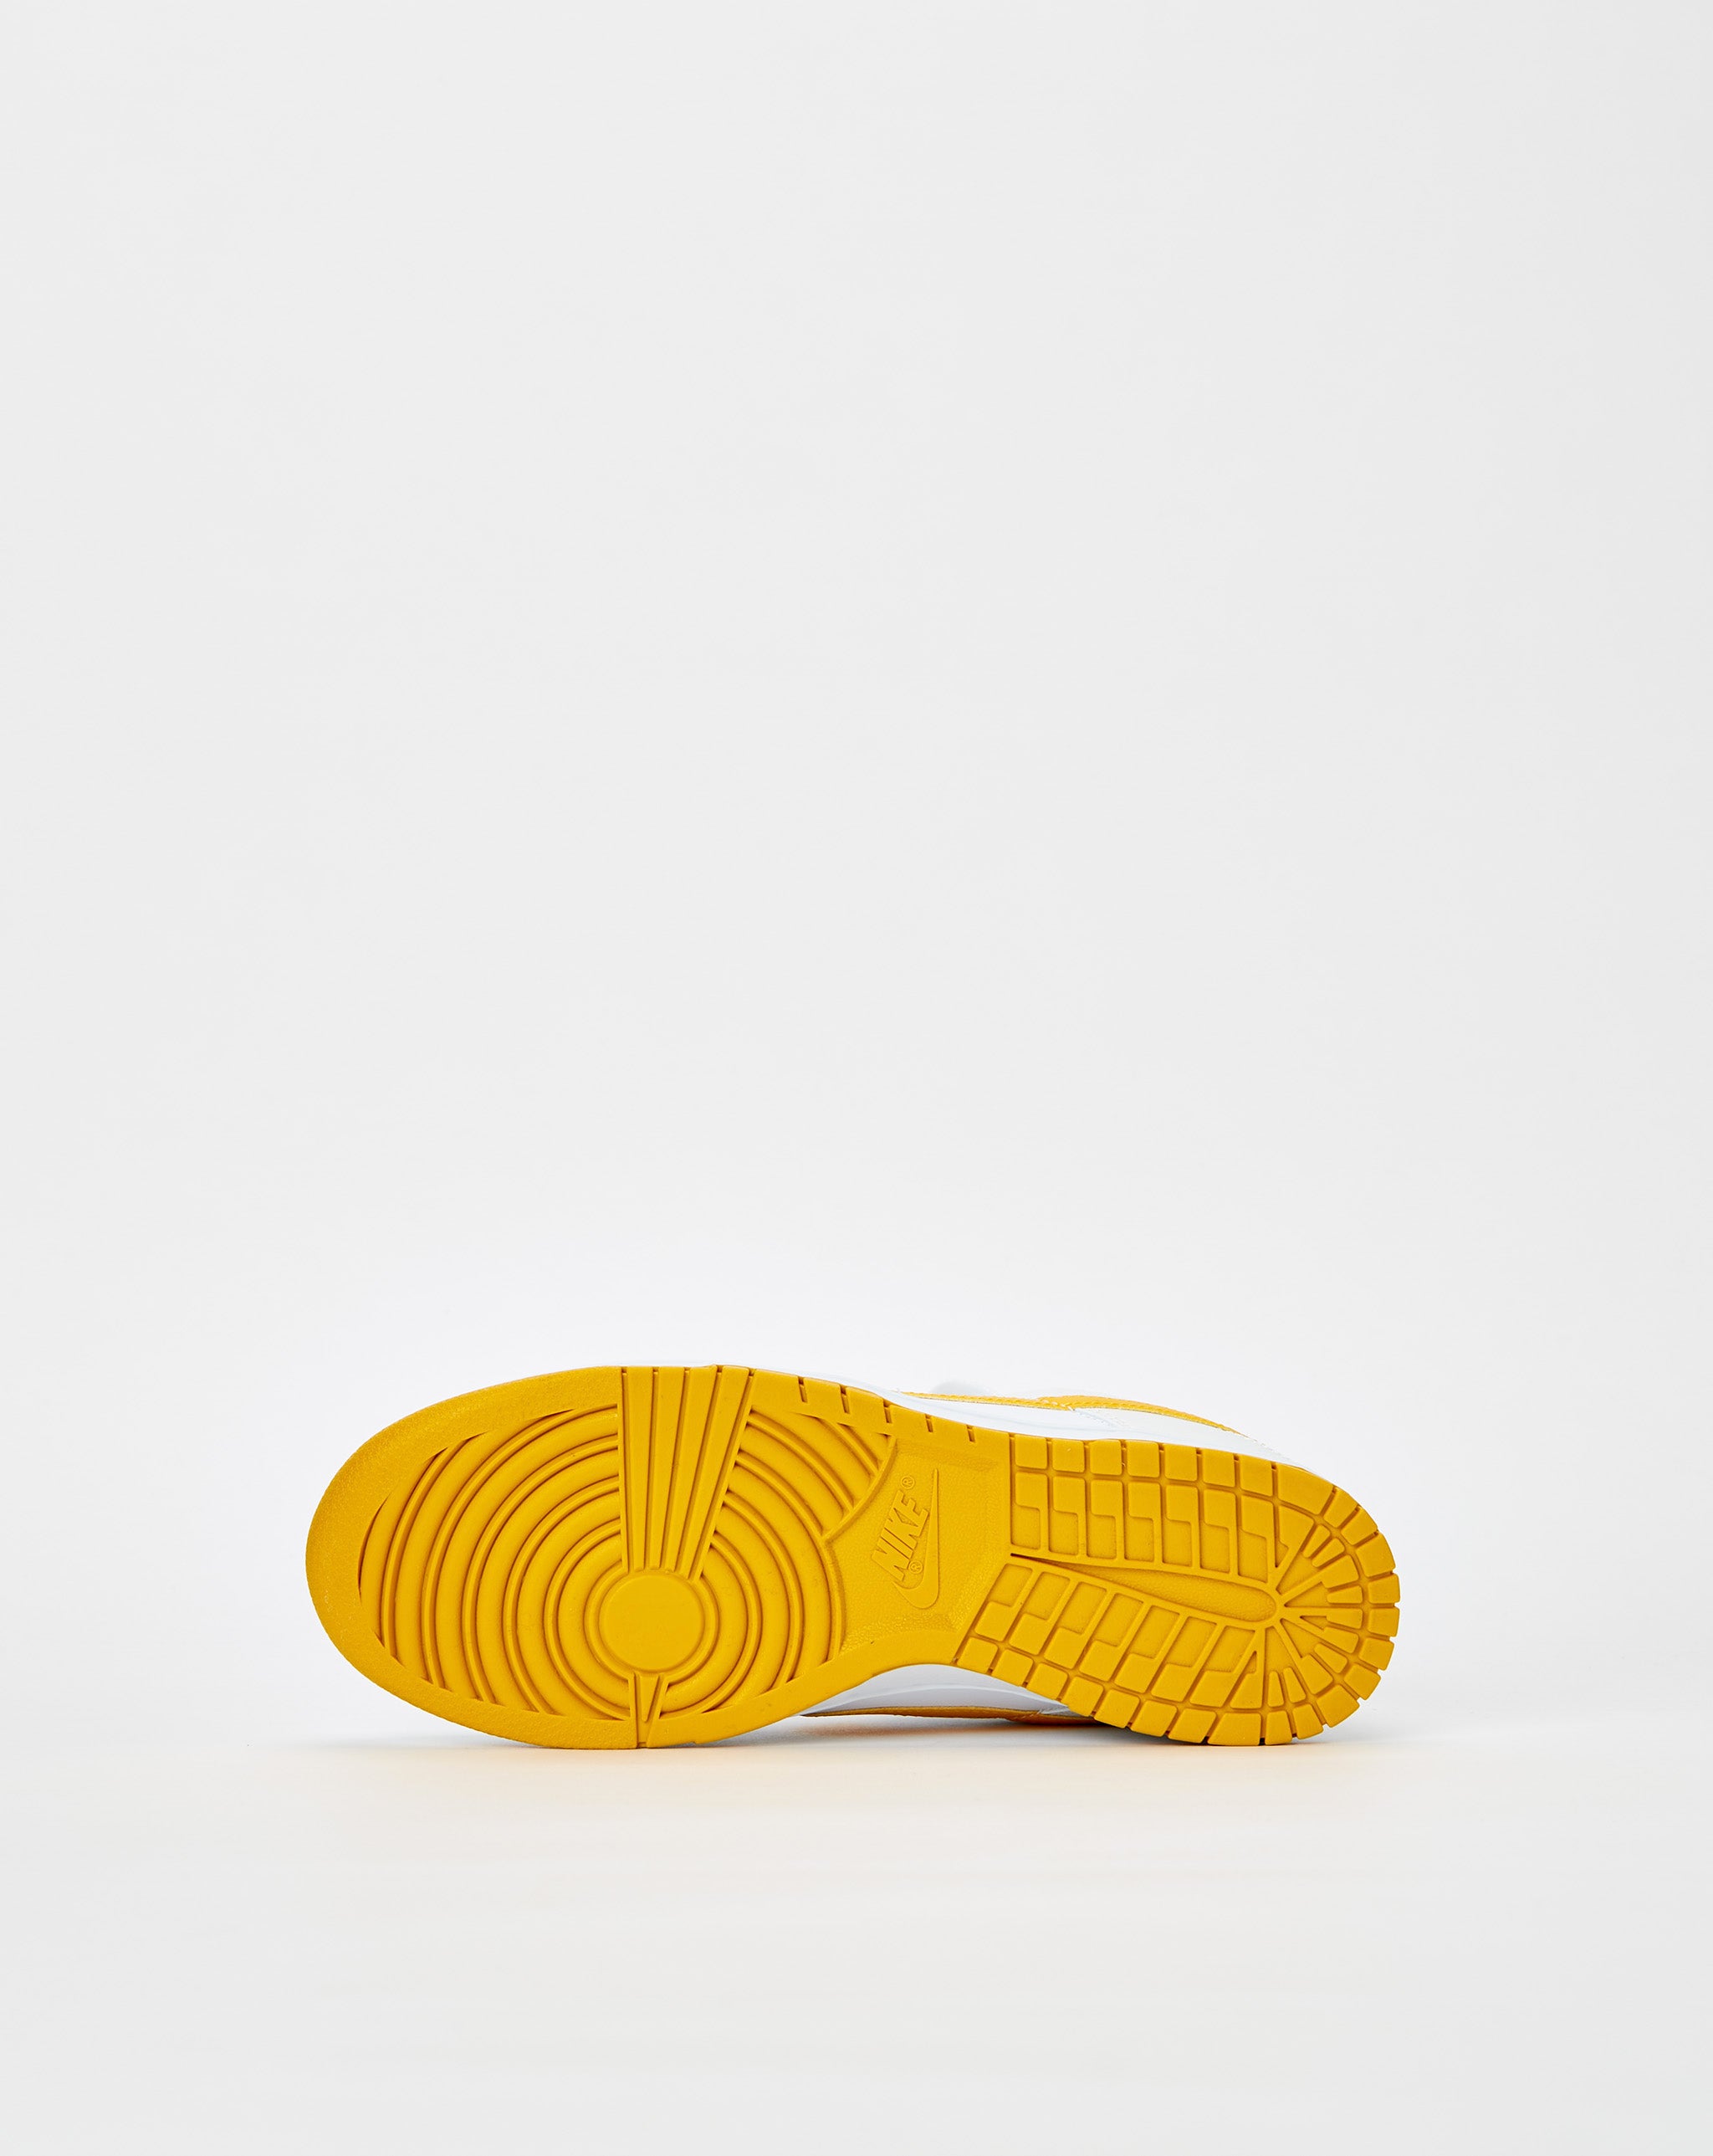 Nike Sandals DUDINO Polka 2C45B Evil Eye 254  - Cheap Erlebniswelt-fliegenfischen Jordan outlet